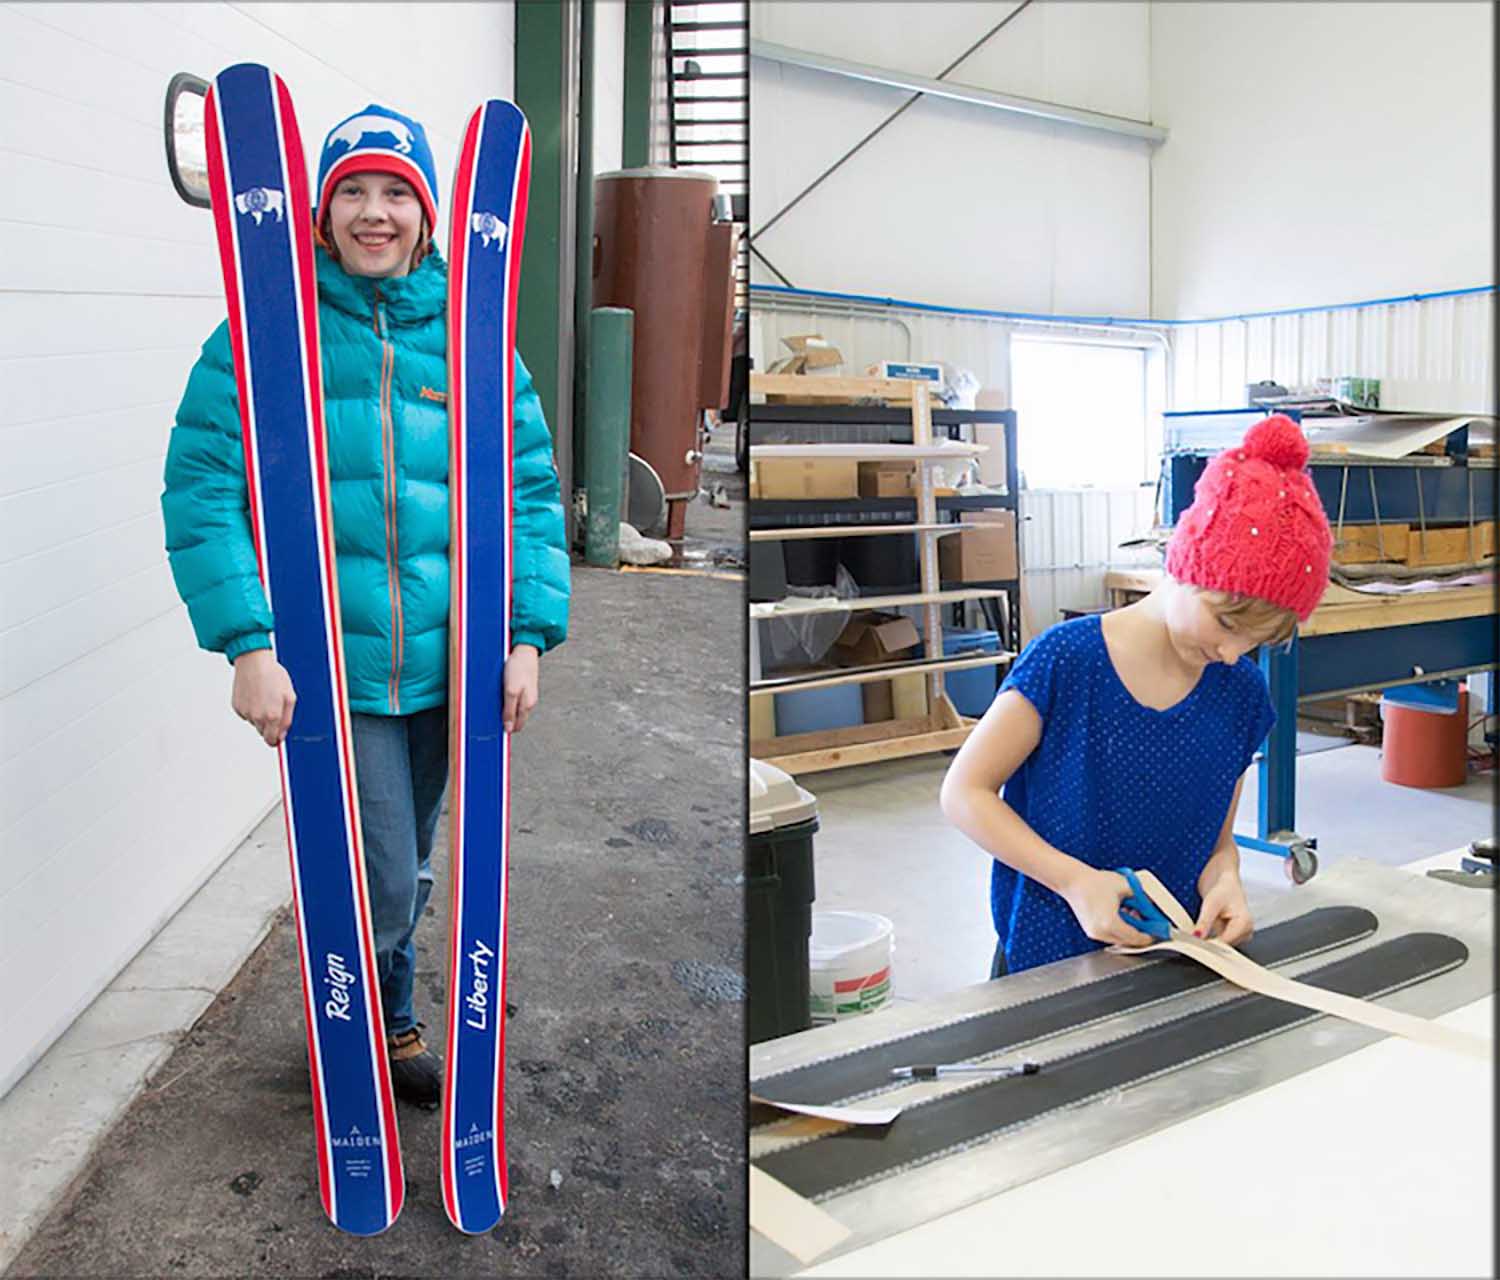 Handmade Skis For Hard-Charging Sisters